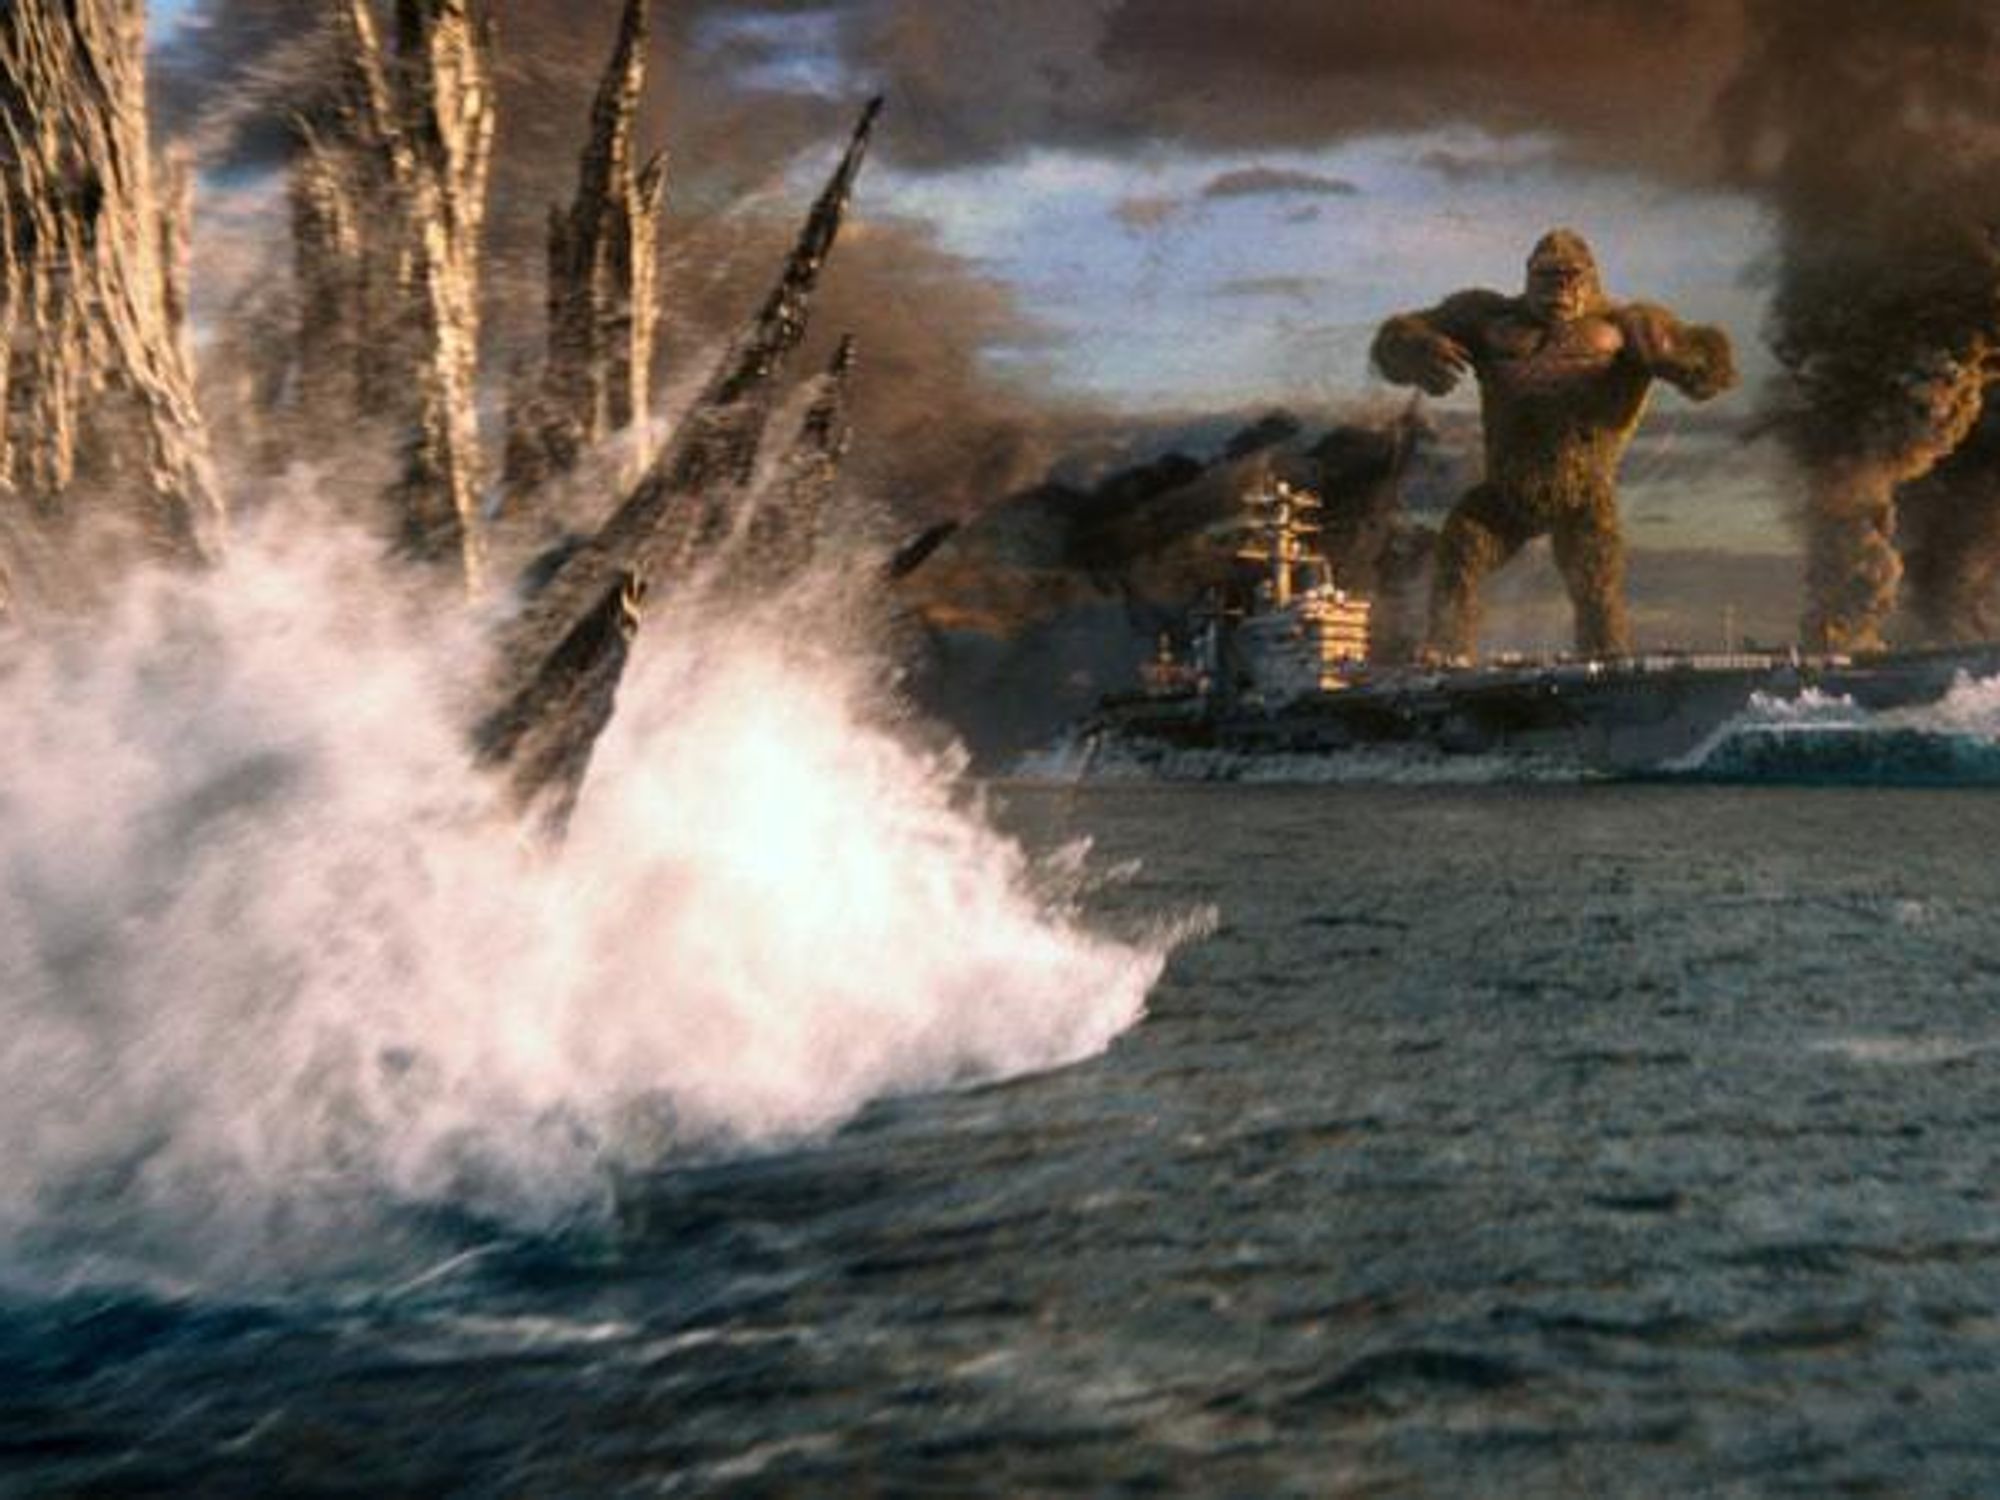 'Godzilla vs Kong' Fills Theater Seats, but Hollywood Still Has Reason to Worry